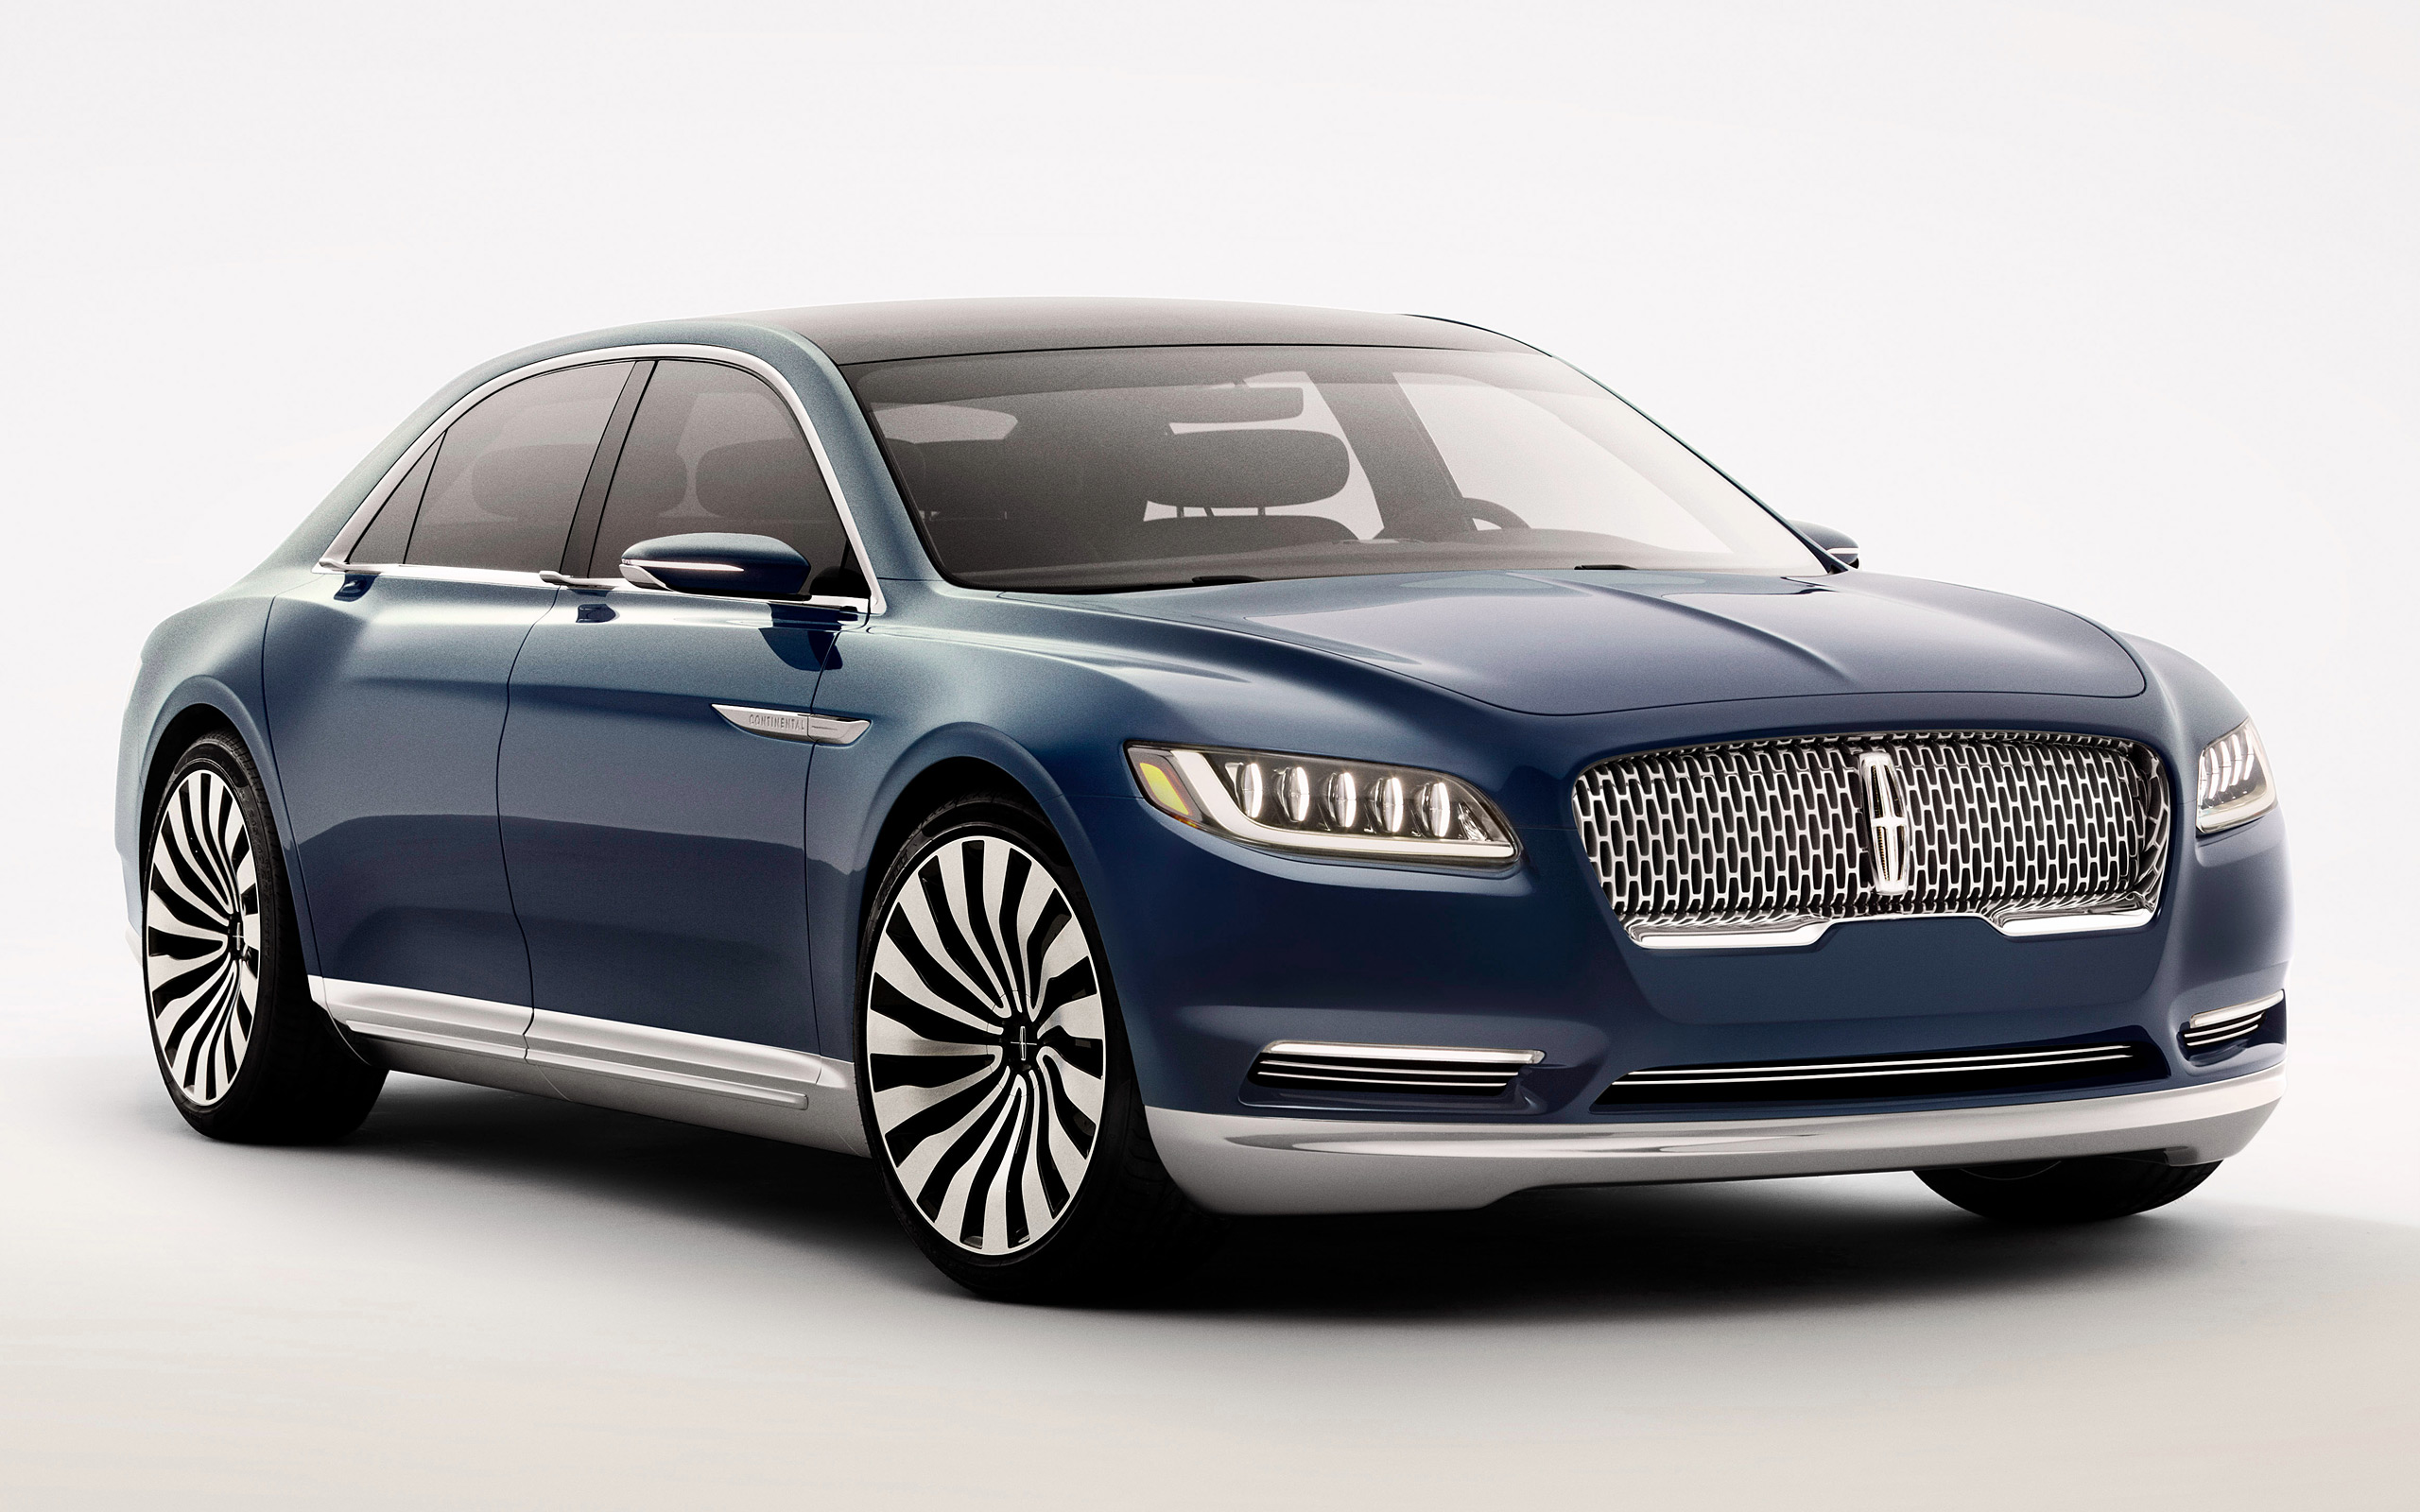  2015 Lincoln Continental Concept Wallpaper.